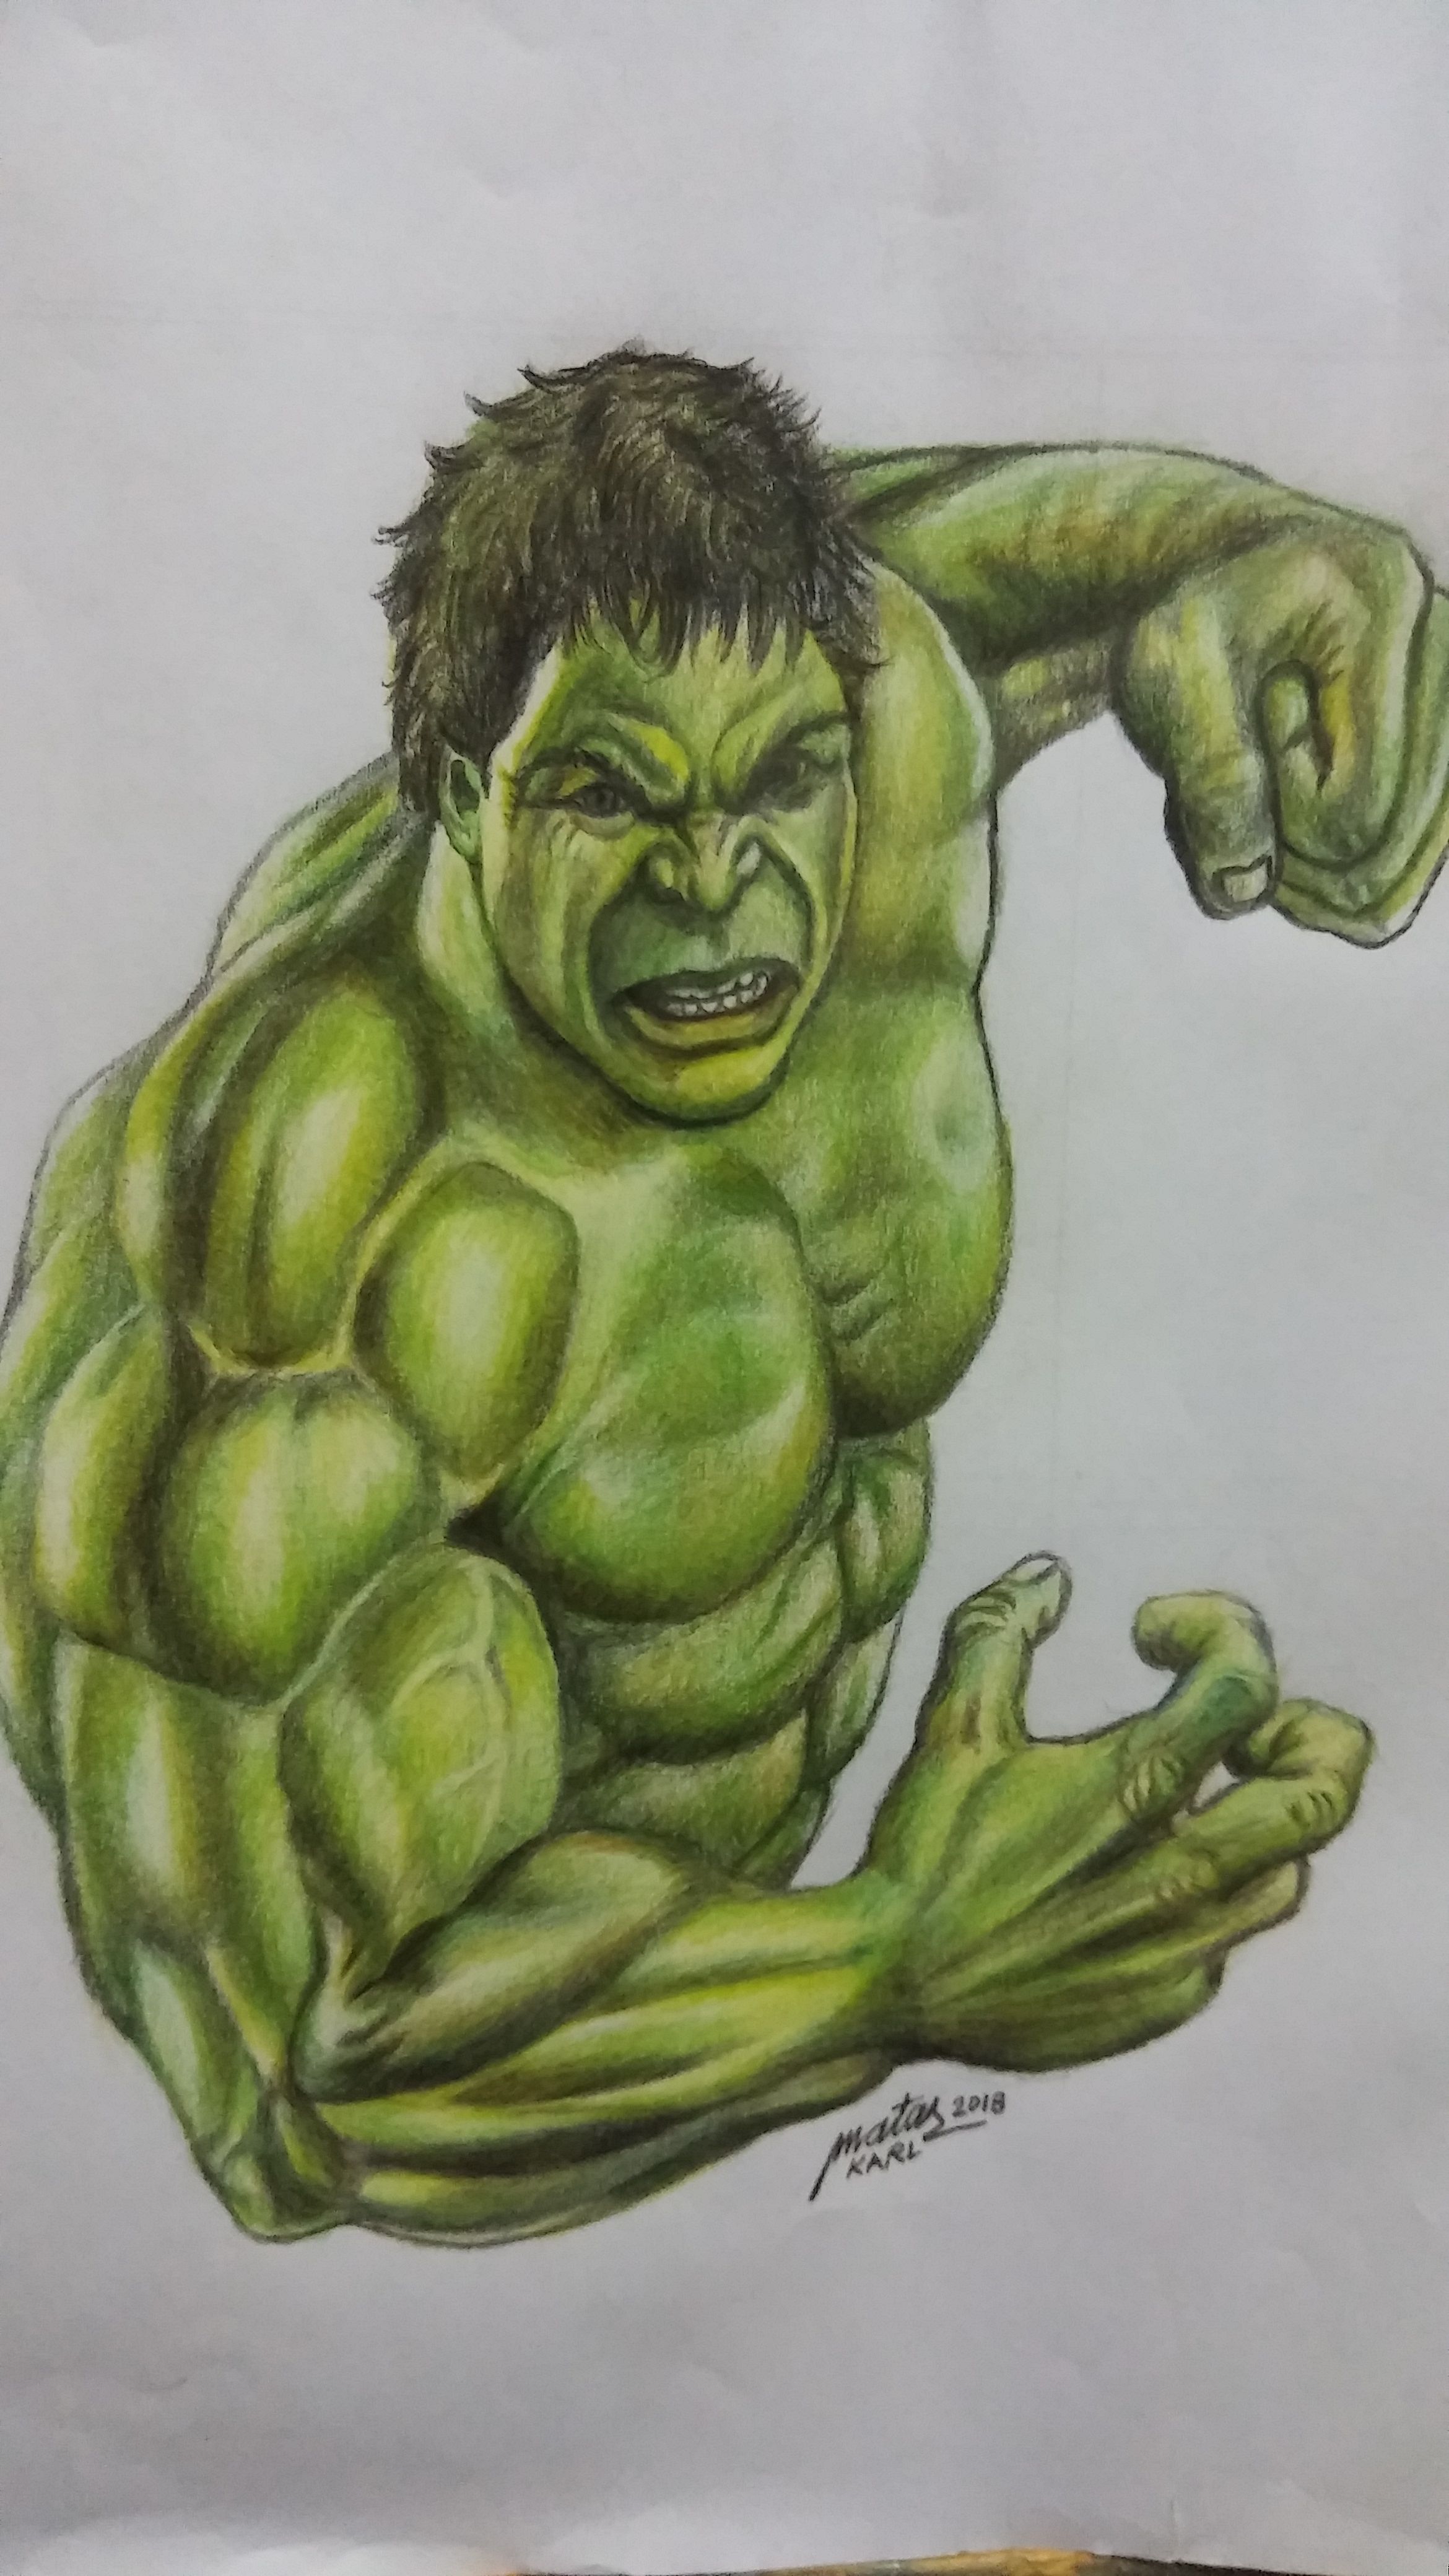 Colored Pencil Drawing: Incredible Hulk - Speed Draw | JosYMovieS - YouTube